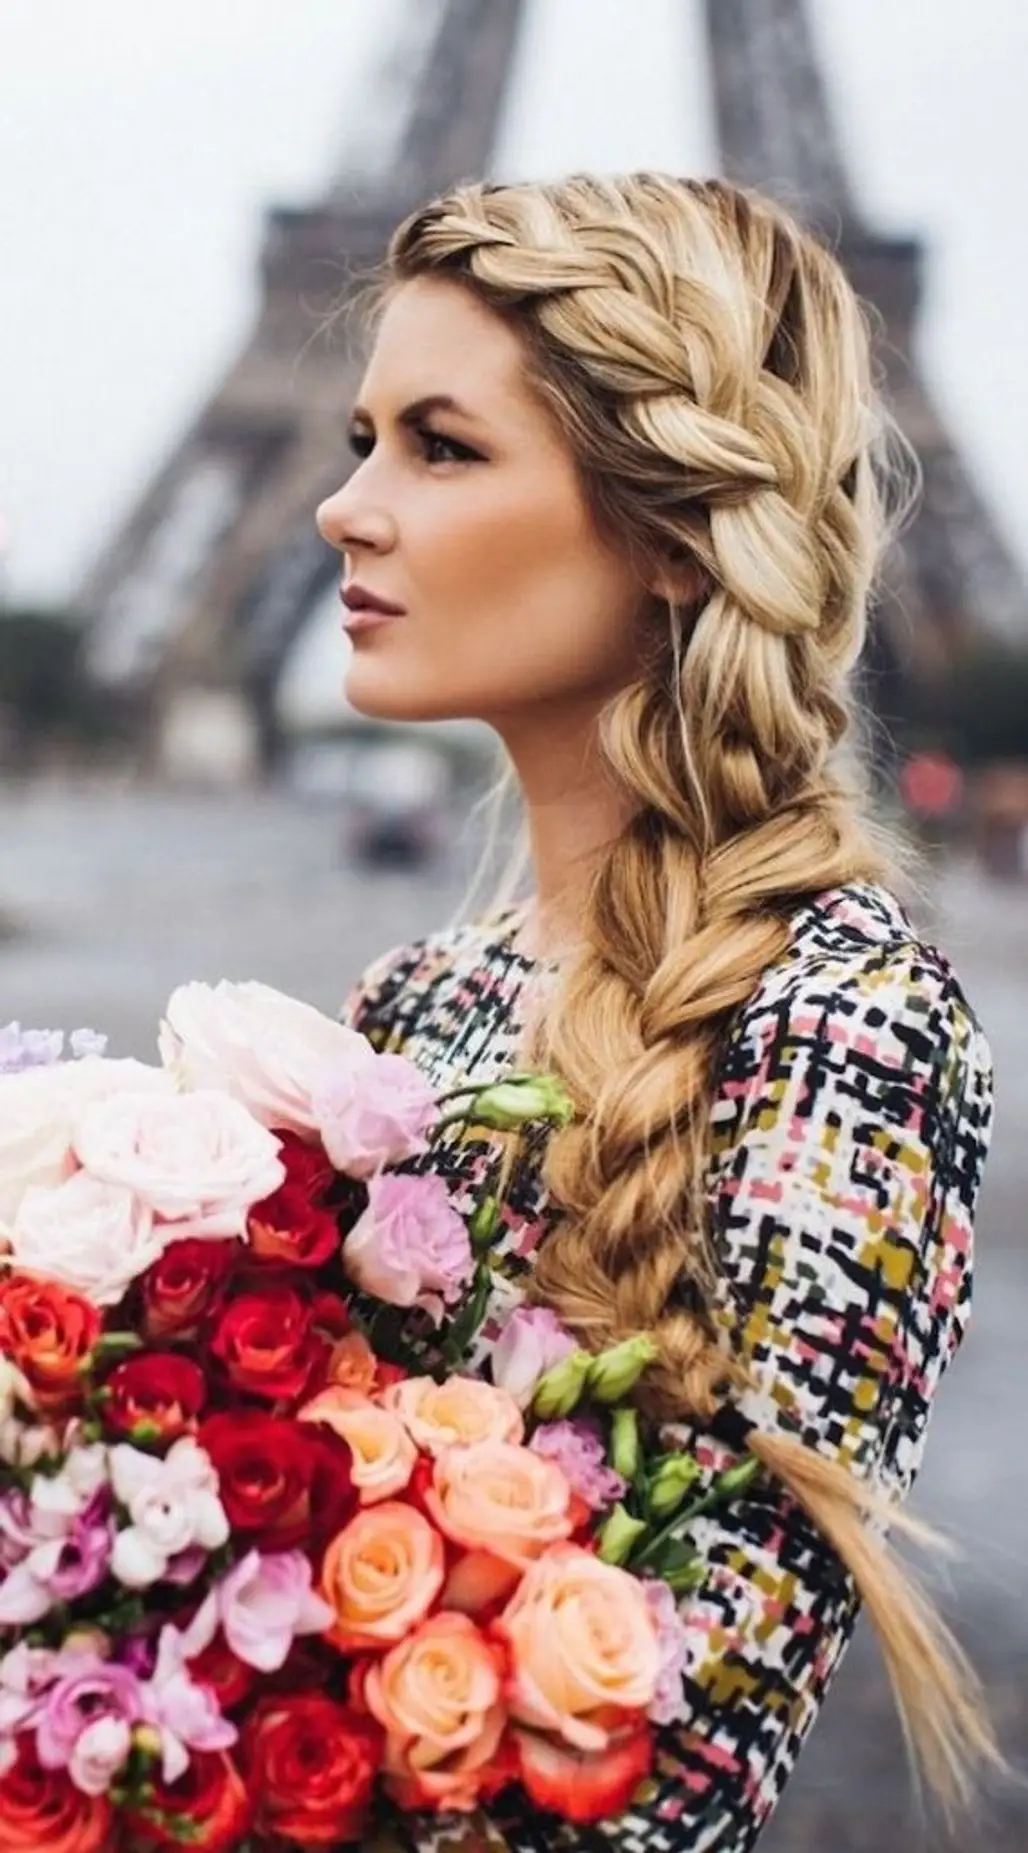 hair,beauty,hairstyle,flower,bride,